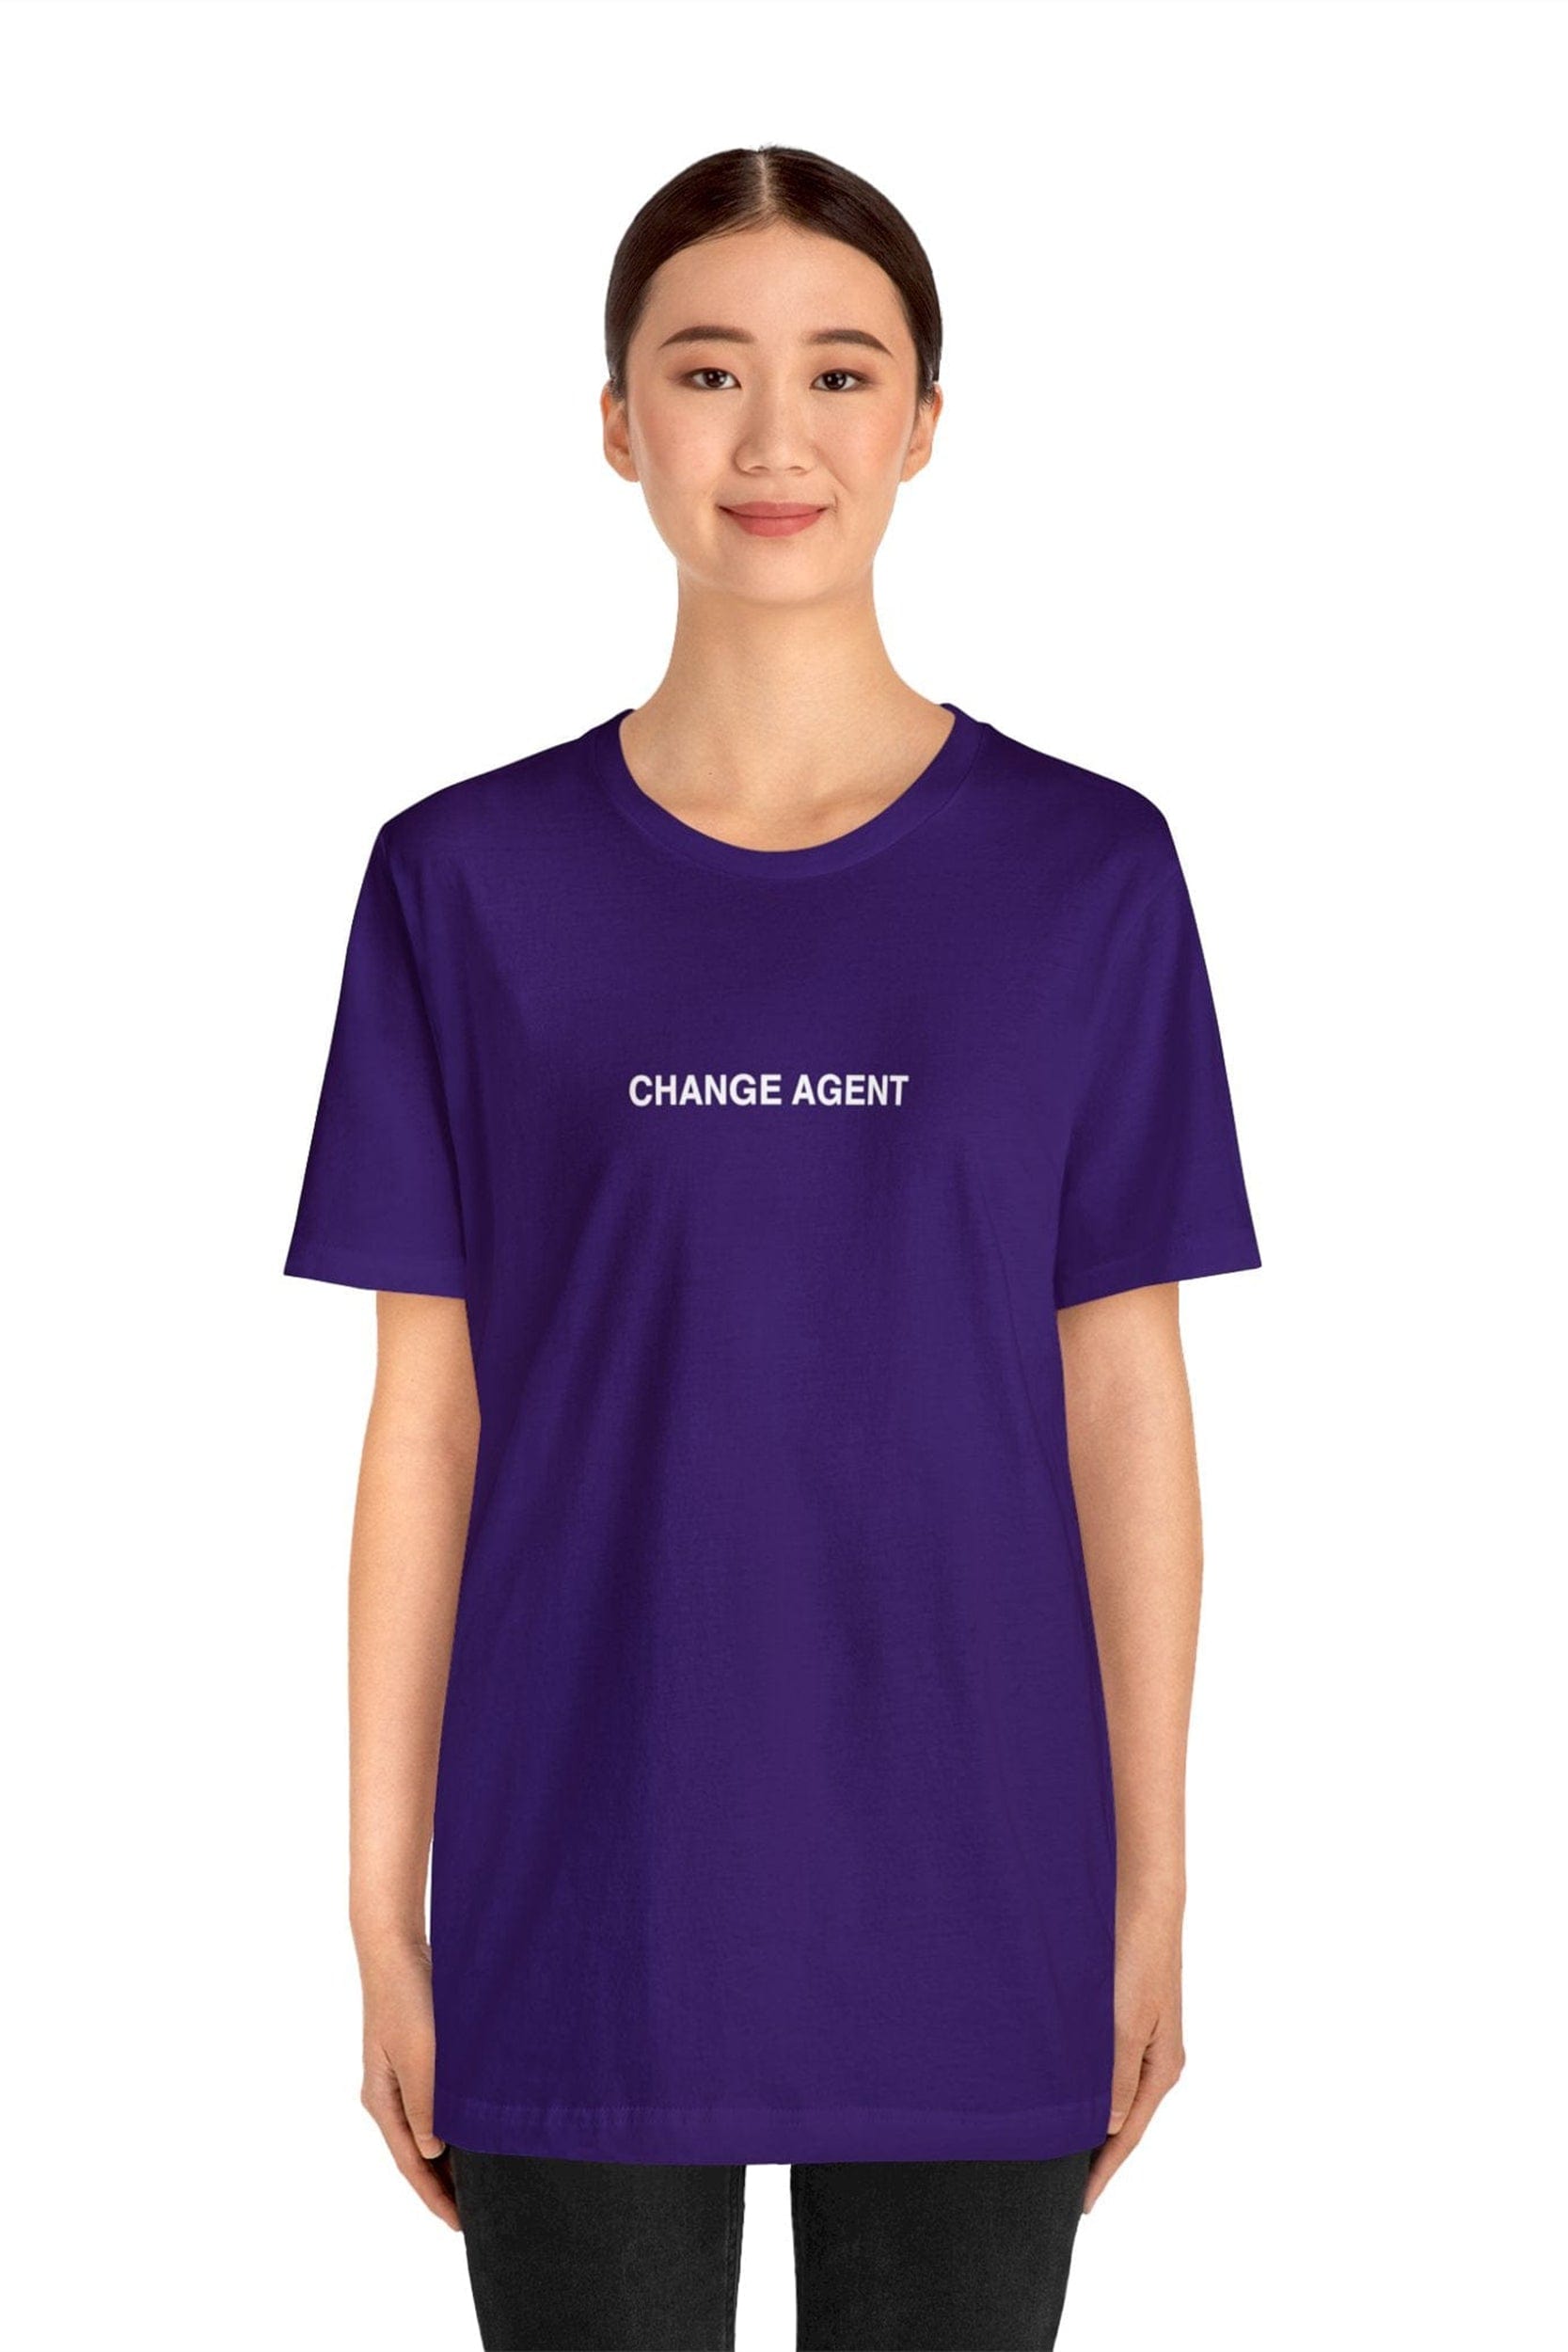 "CHANGE AGENT" T-Shirt